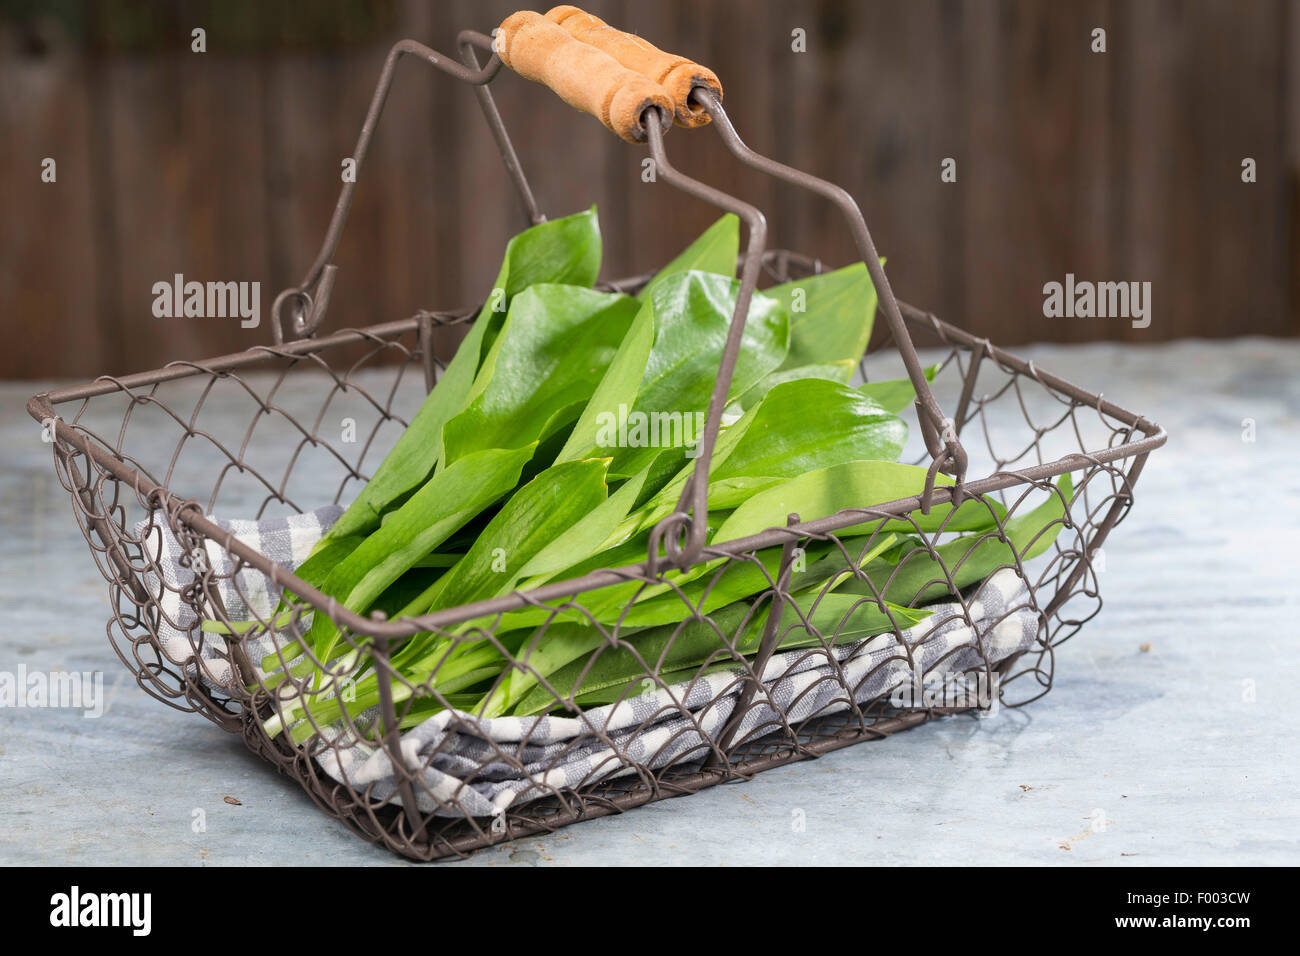 ramsons, buckrams, wild garlic, broad-leaved garlic, wood garlic, bear leek, bear's garlic  (Allium ursinum), collected leaves in a basket, Germany Stock Photo